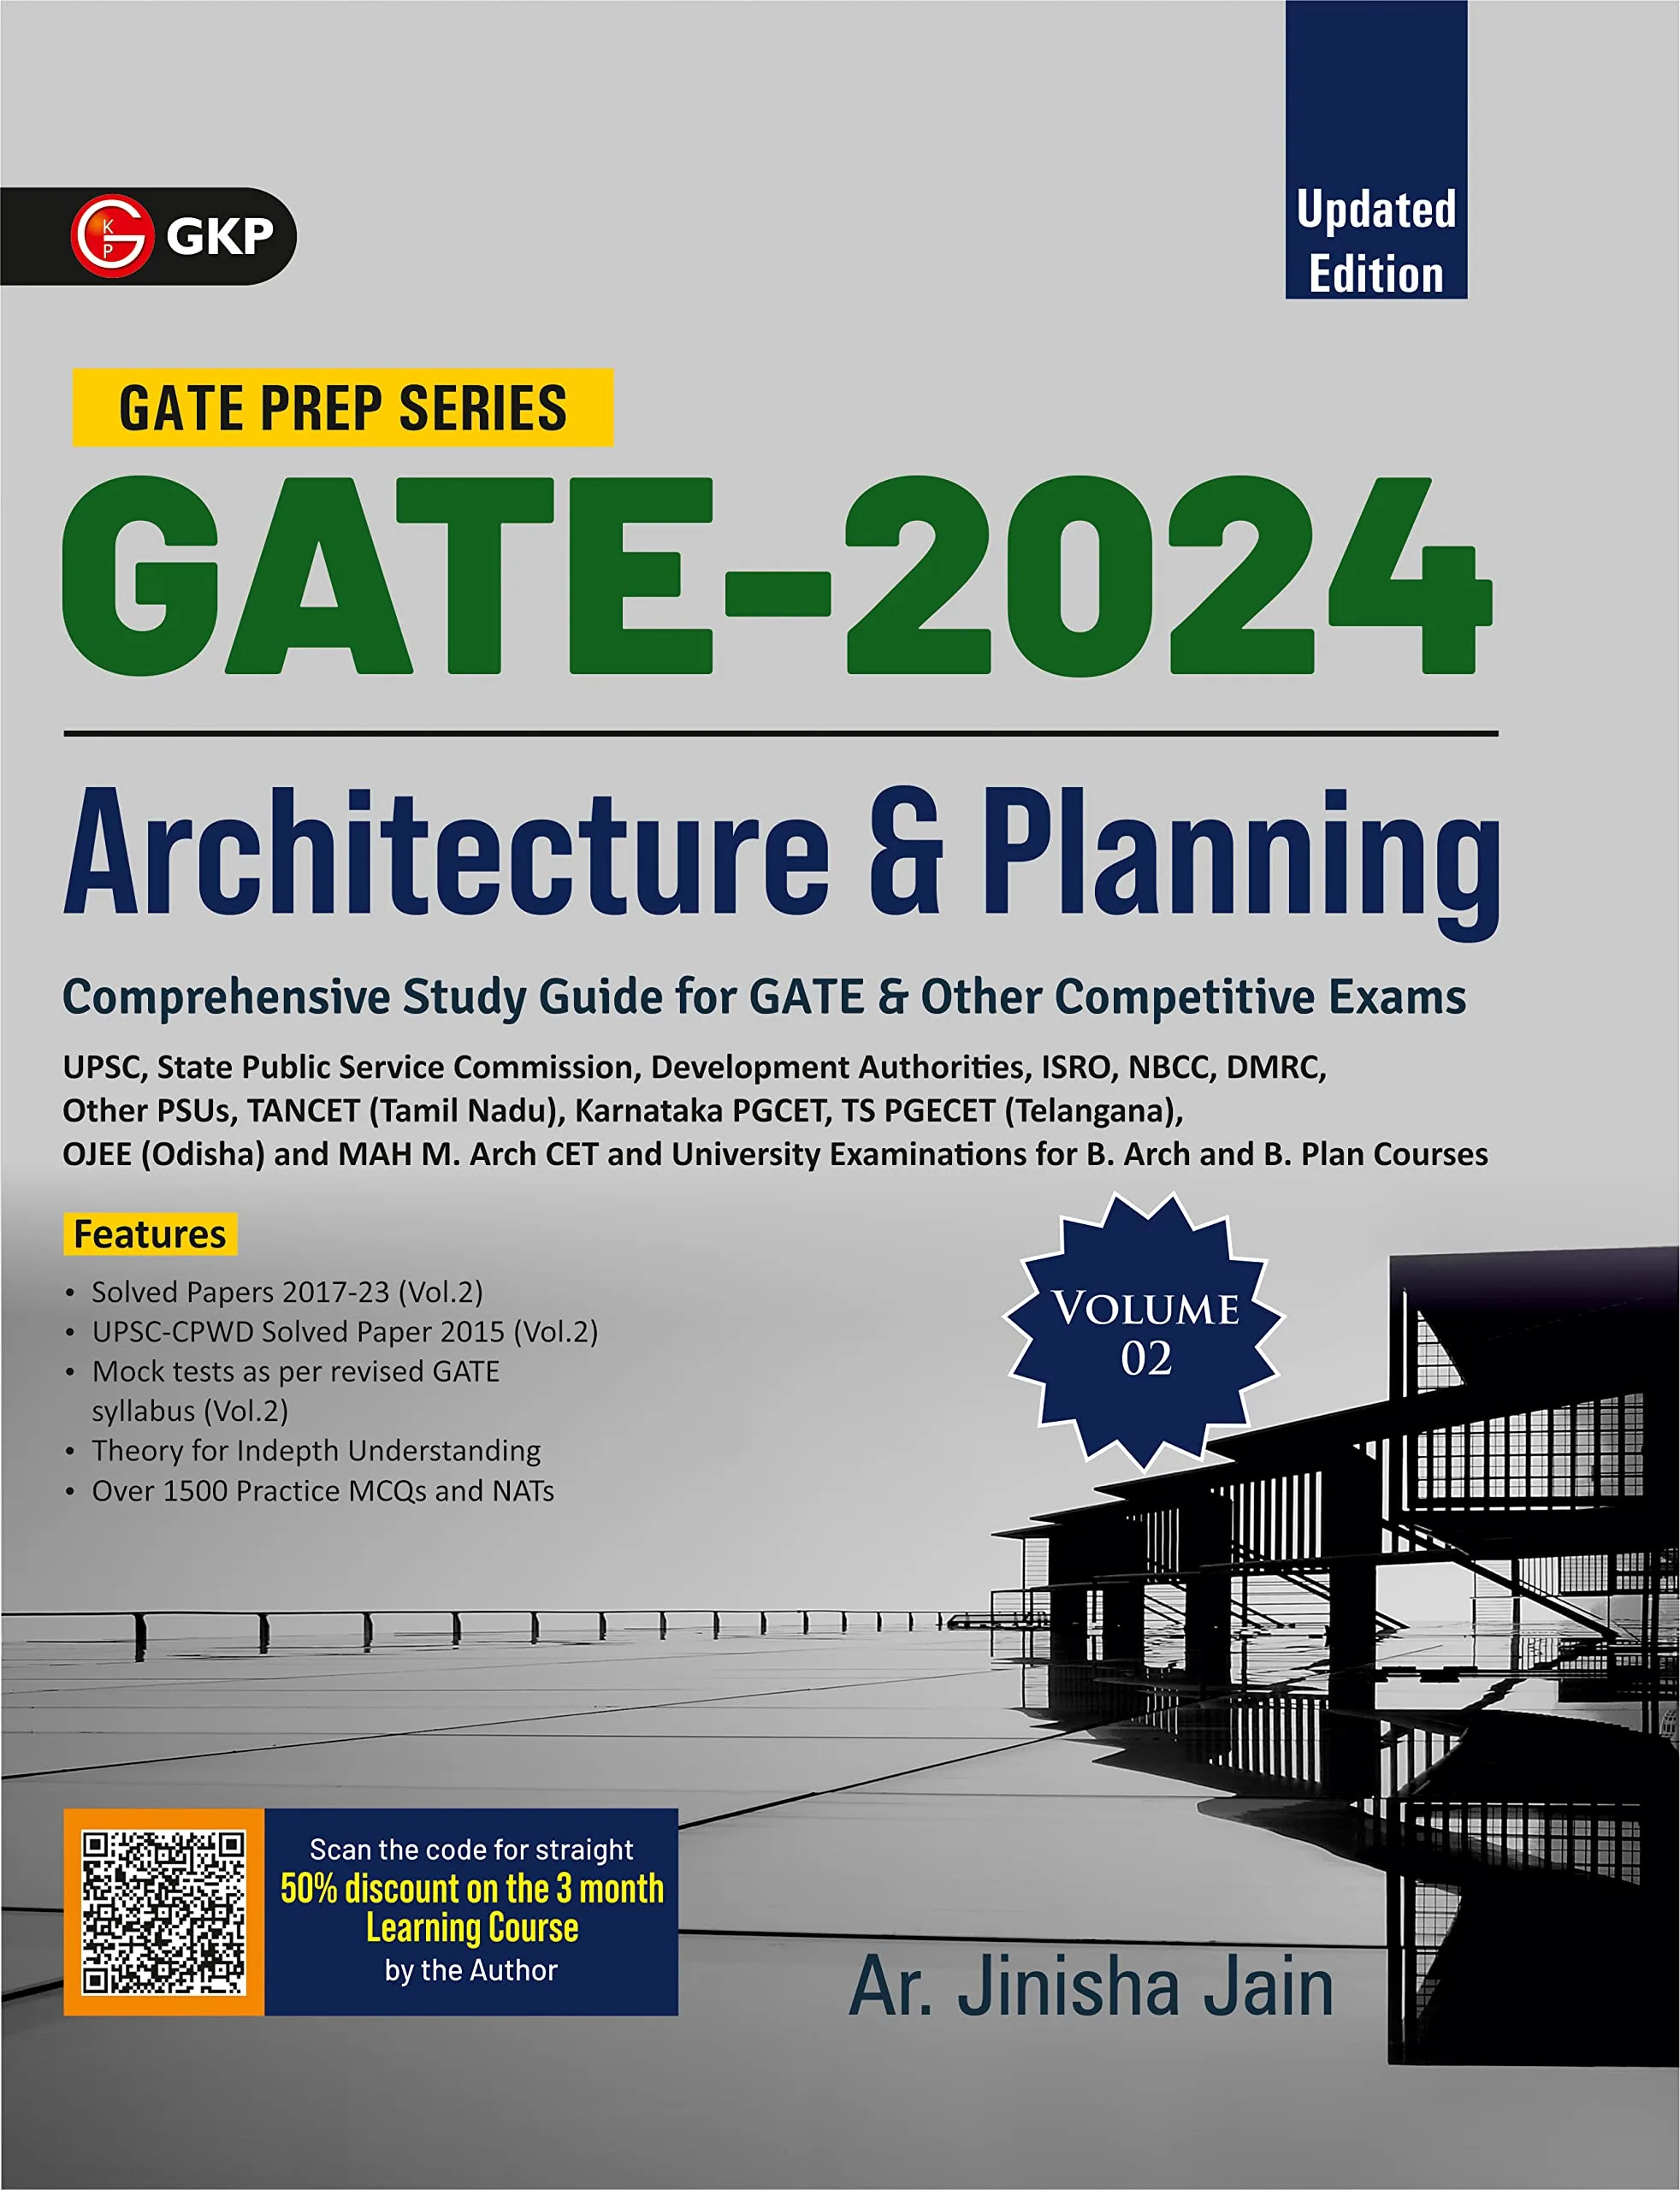 GATE 2024 Architecture & Planning Vol 2 Guide by Ar. Jinisha Jain GKP